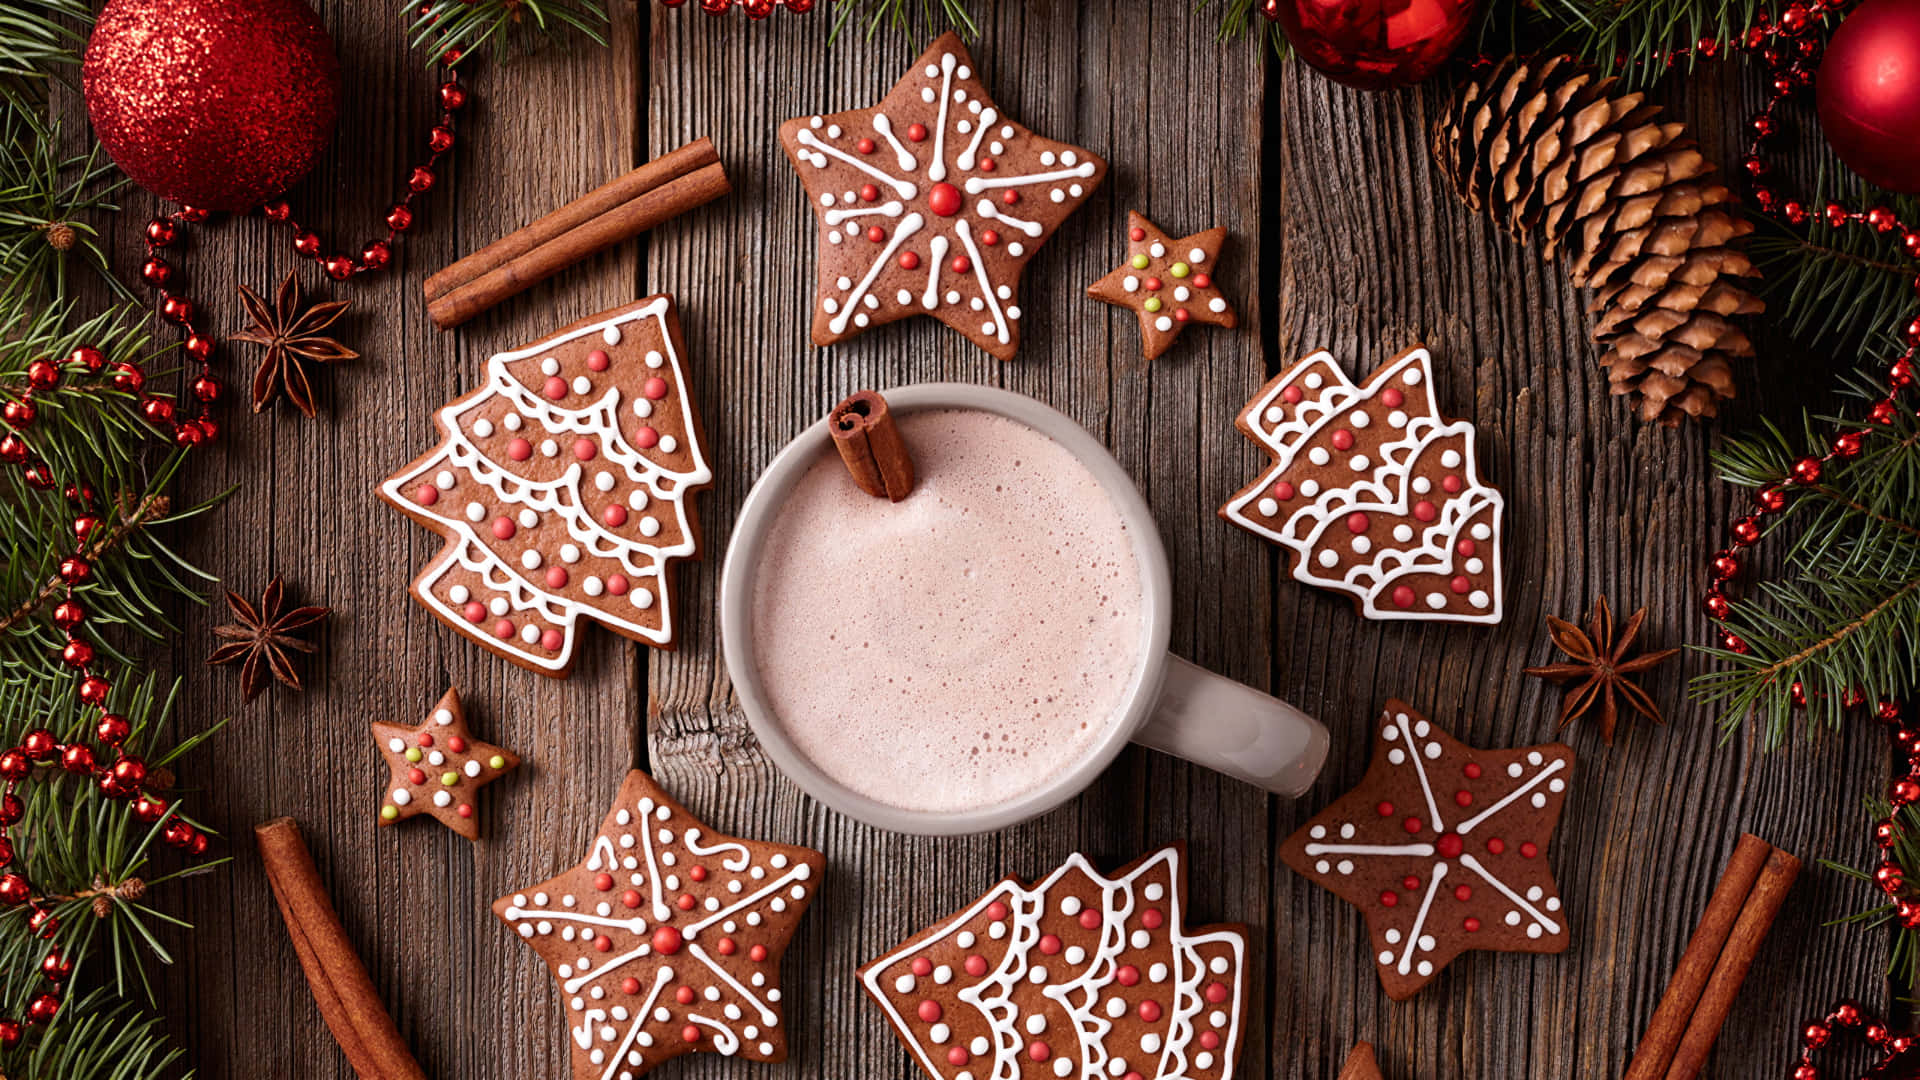 En kop varm chokolade med gingerbread cookies og pyntegenstande.